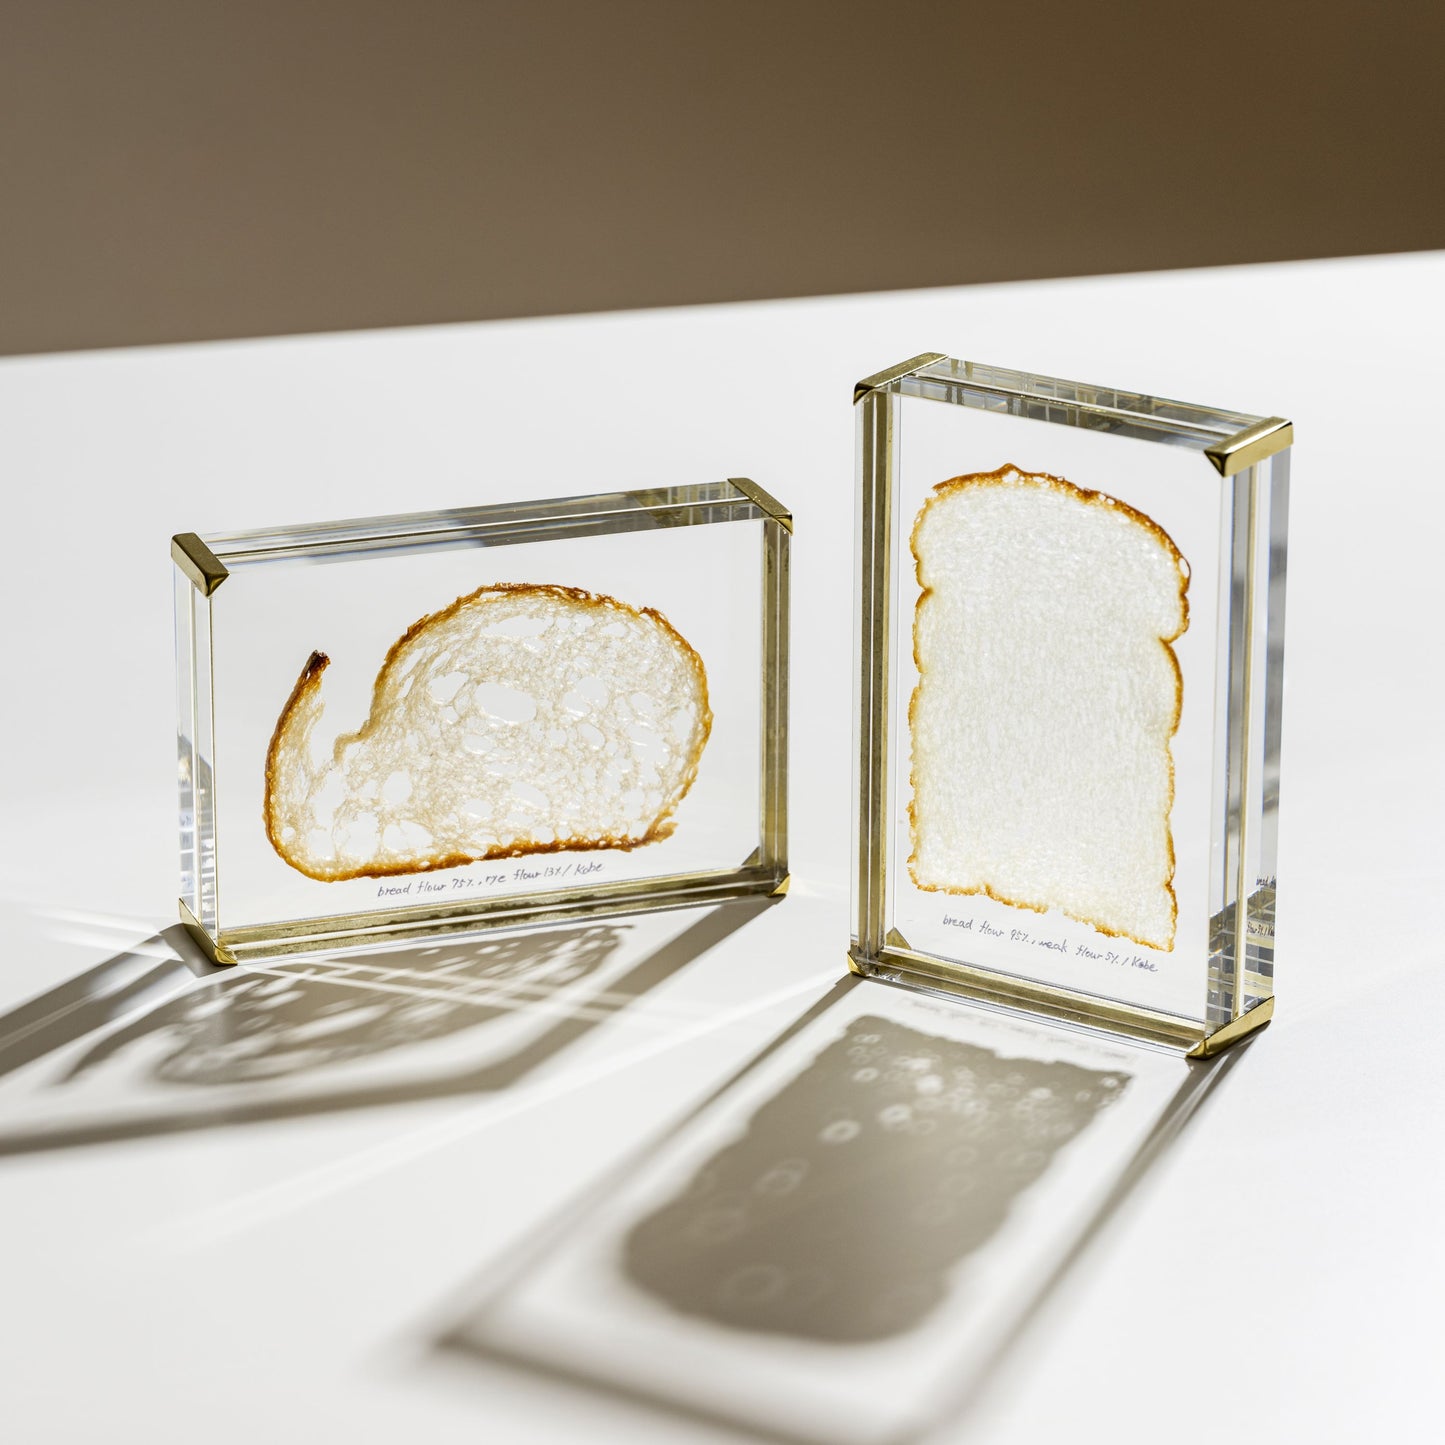 SLICED CAMPAGNE - toast d'objet de pain